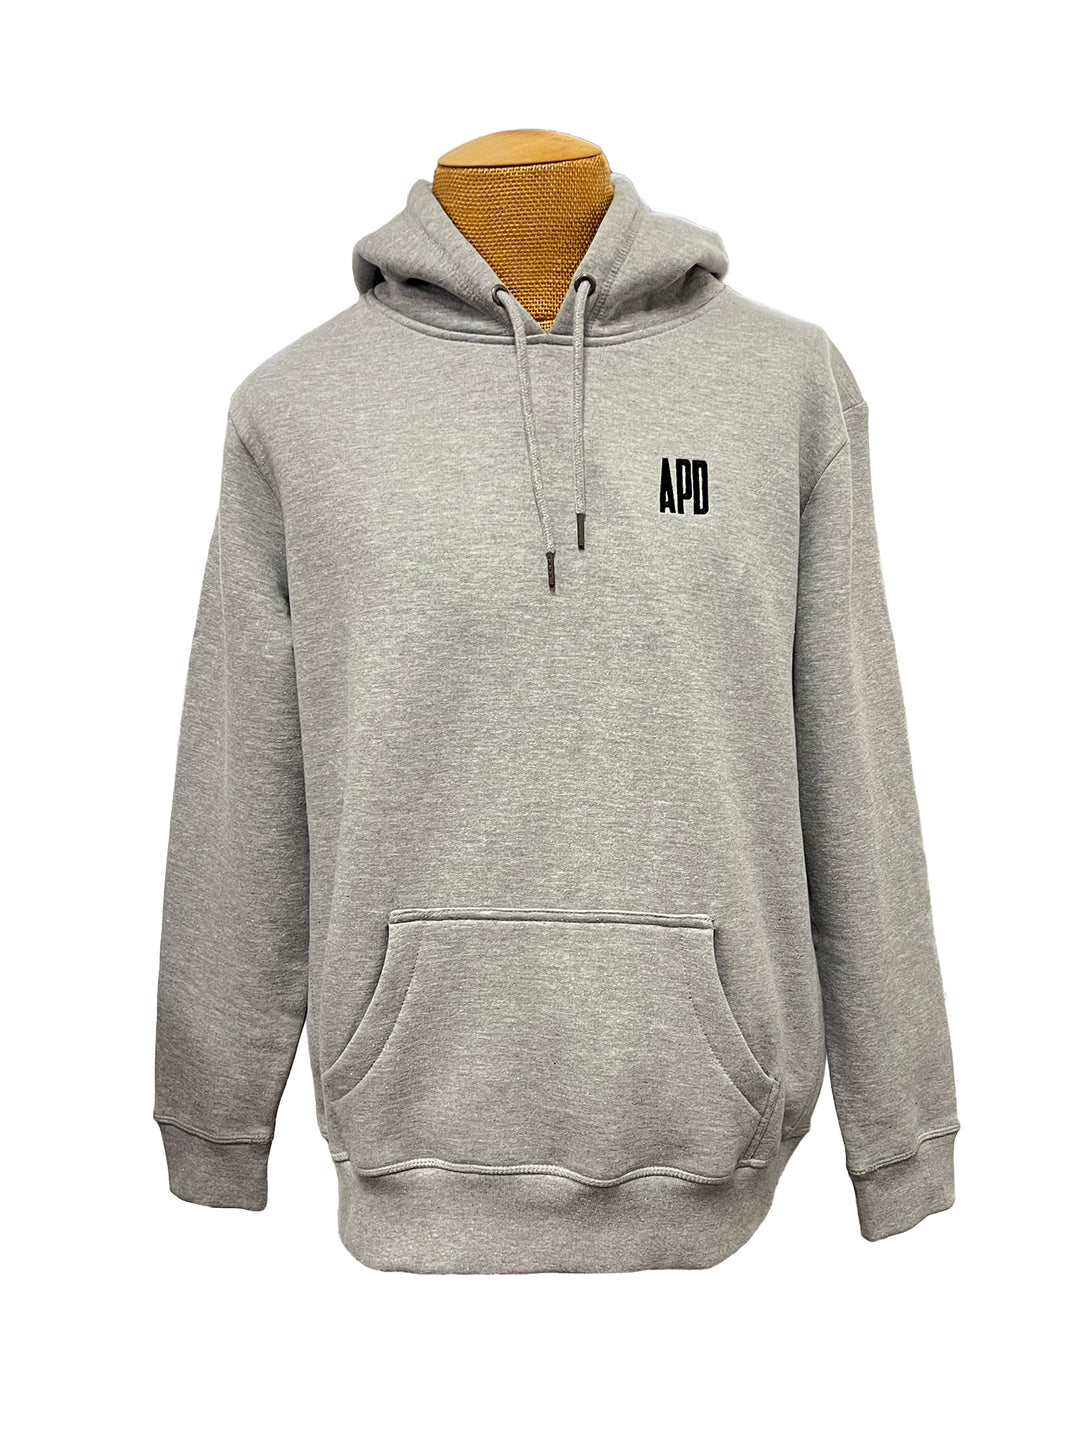 Hooded Sweatshirt in Grey with Custom Print